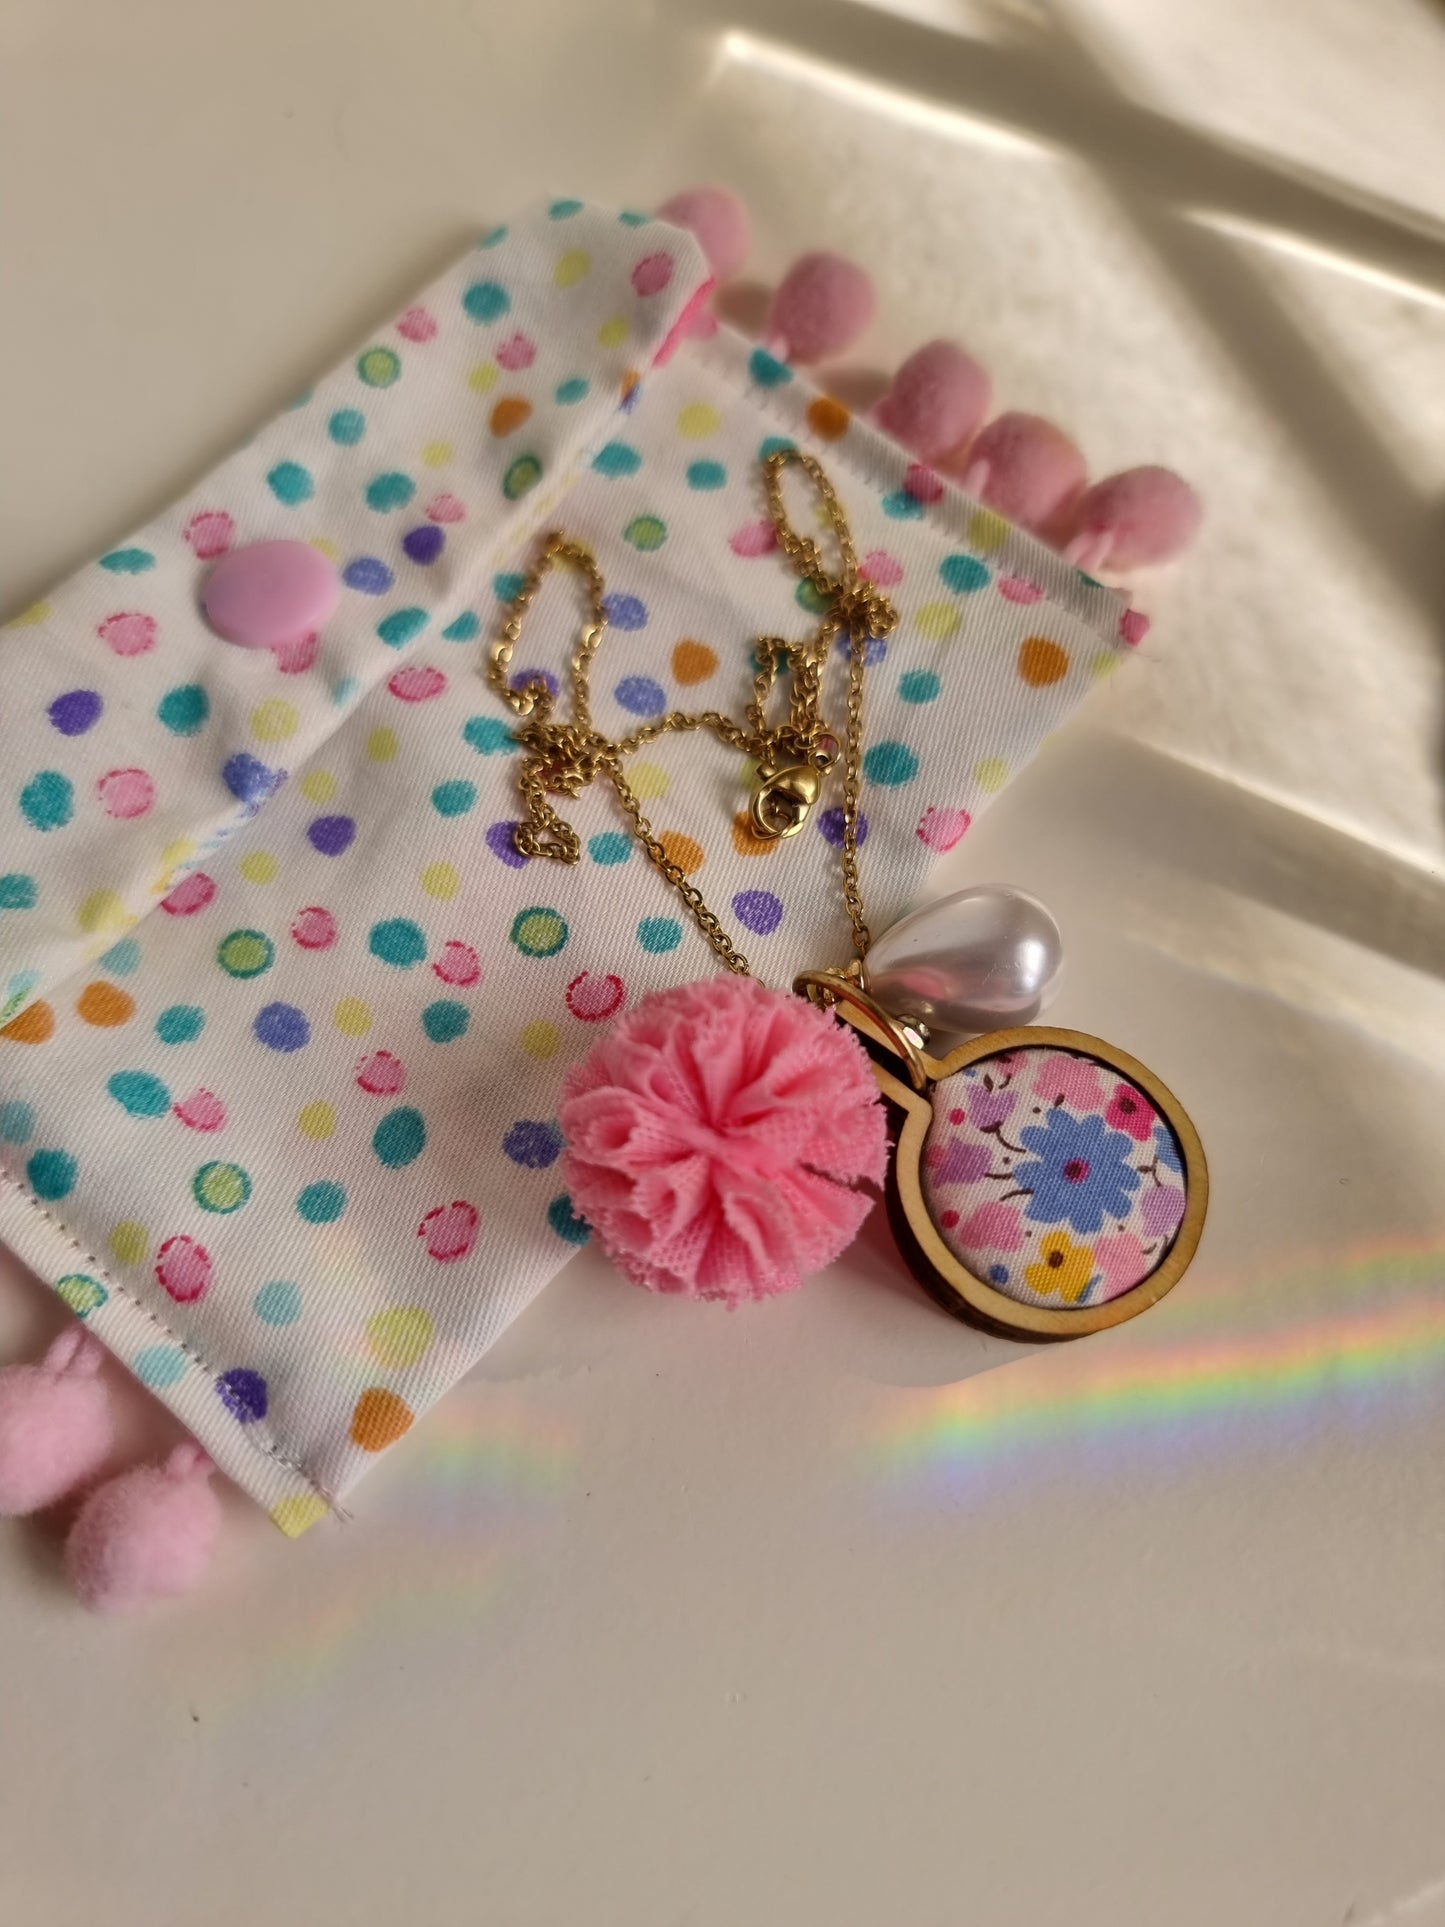 Meri! Miniature embroidery hoop charm necklace